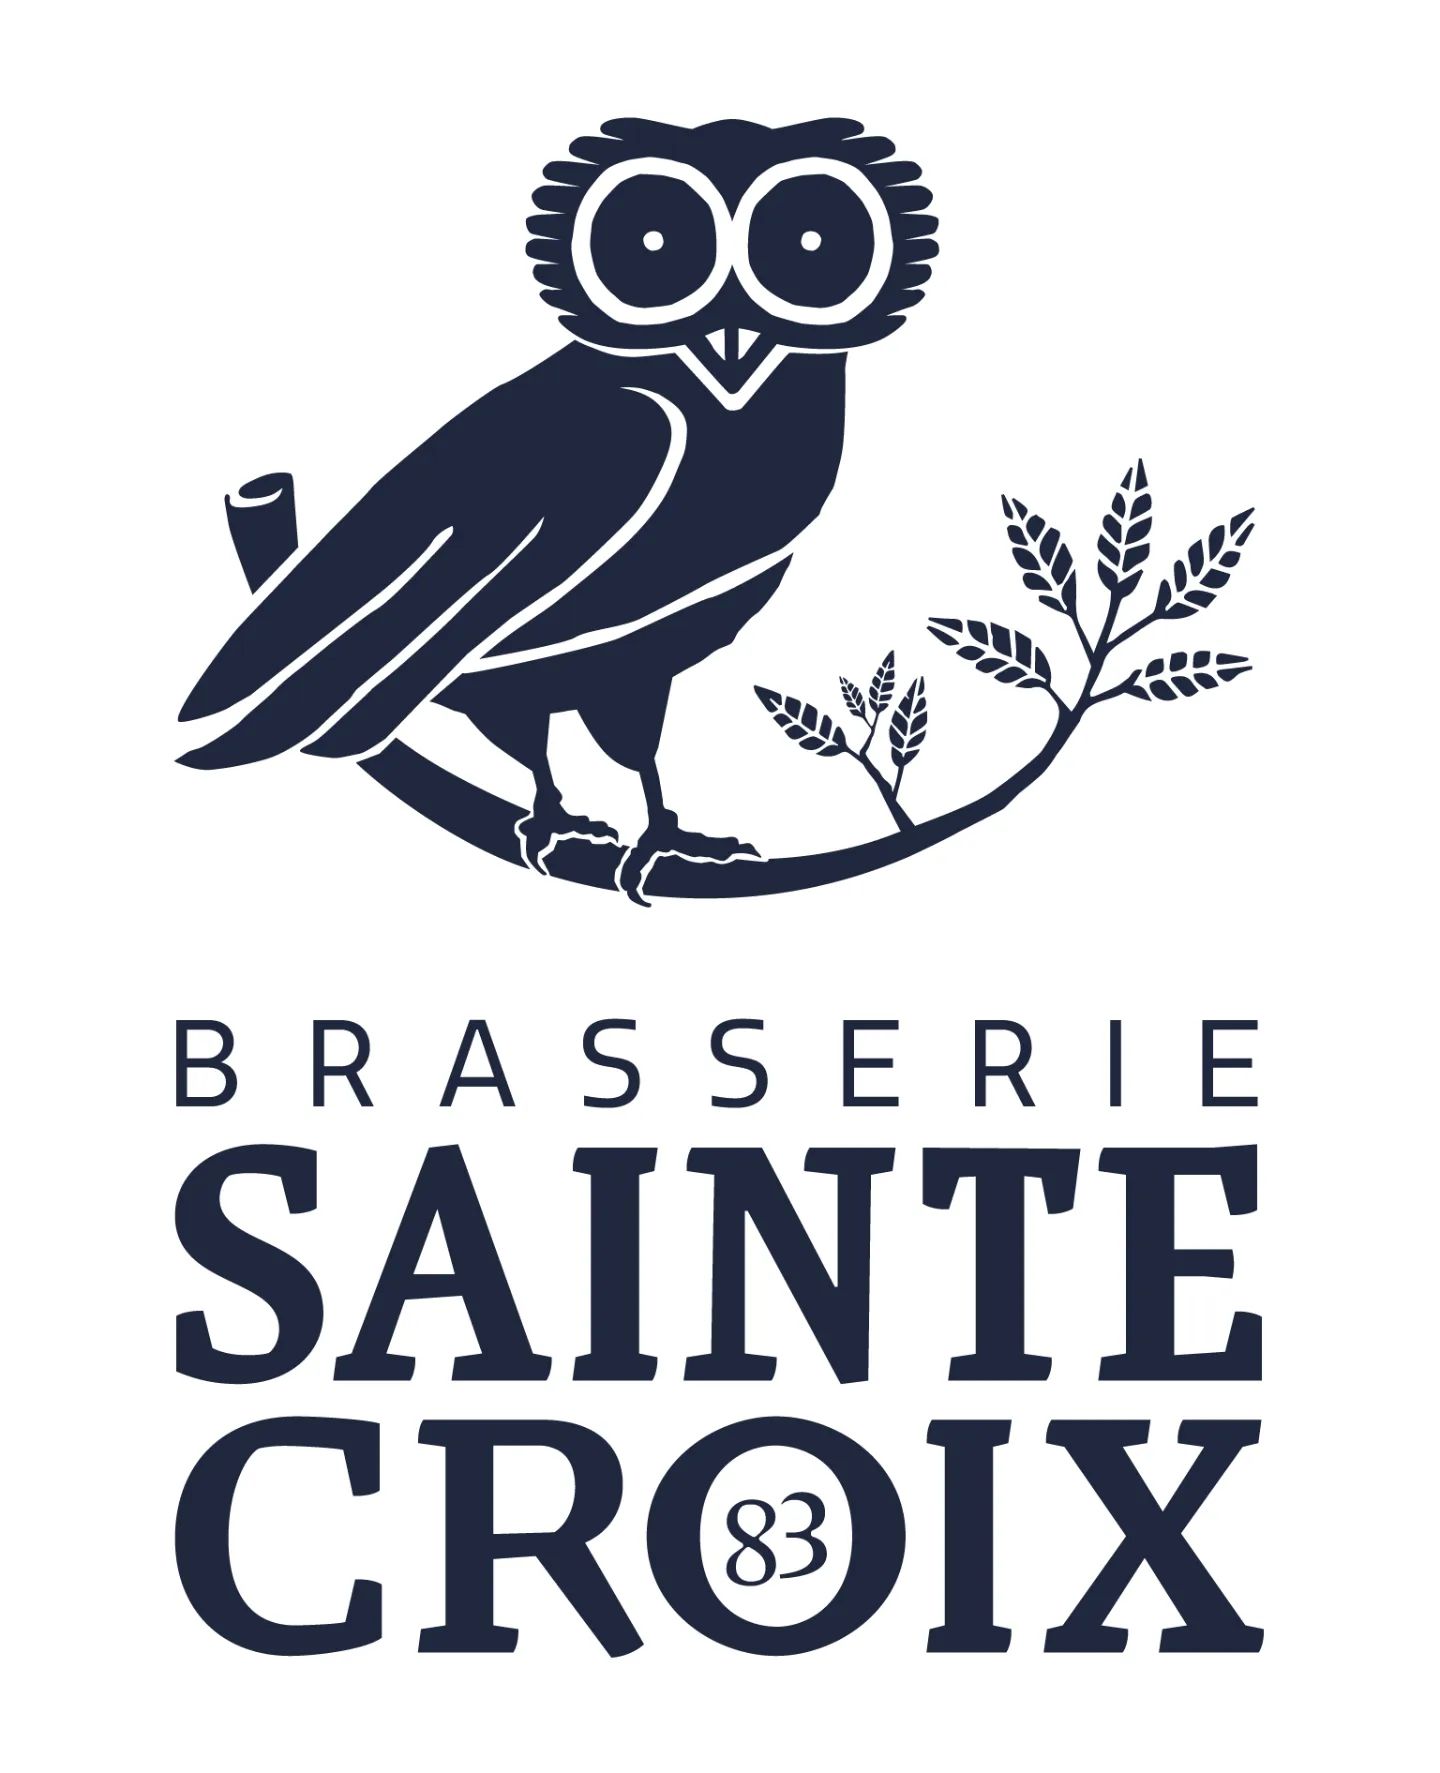 Photo Brewery Sainte Croix 83